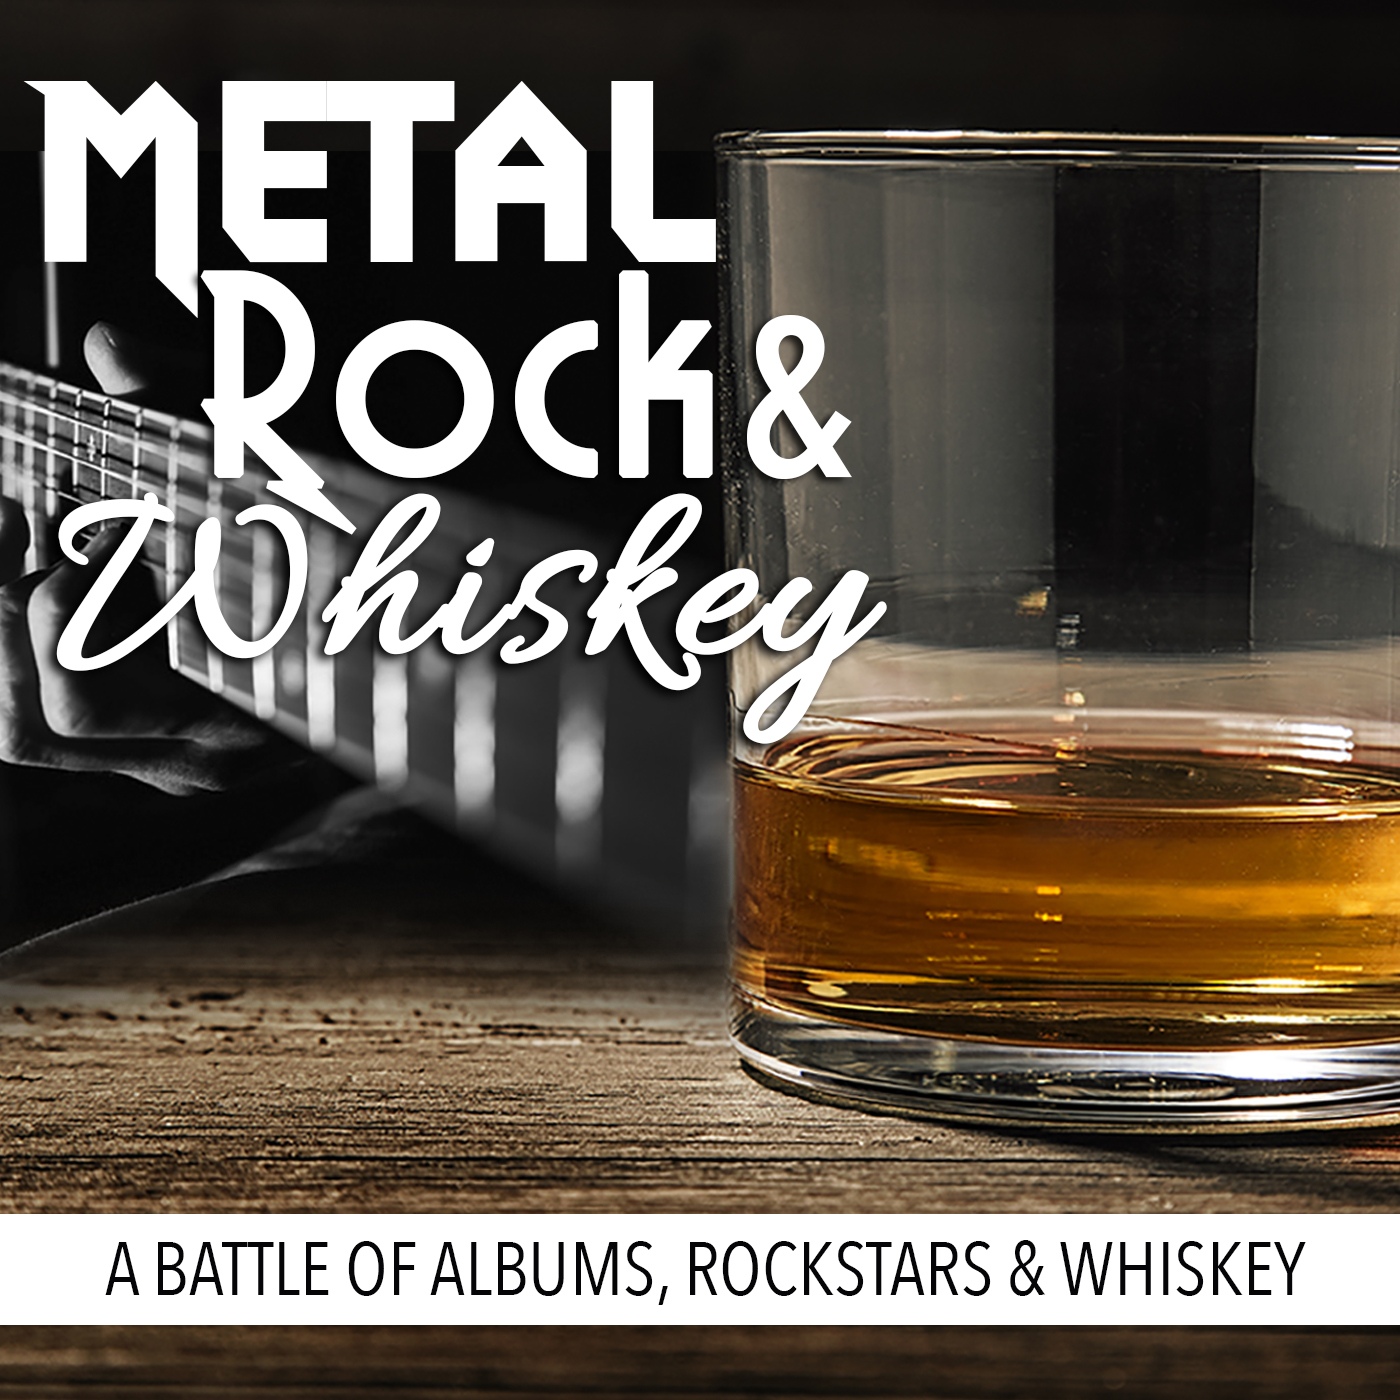 Artwork for podcast Metal, Rock & Whiskey